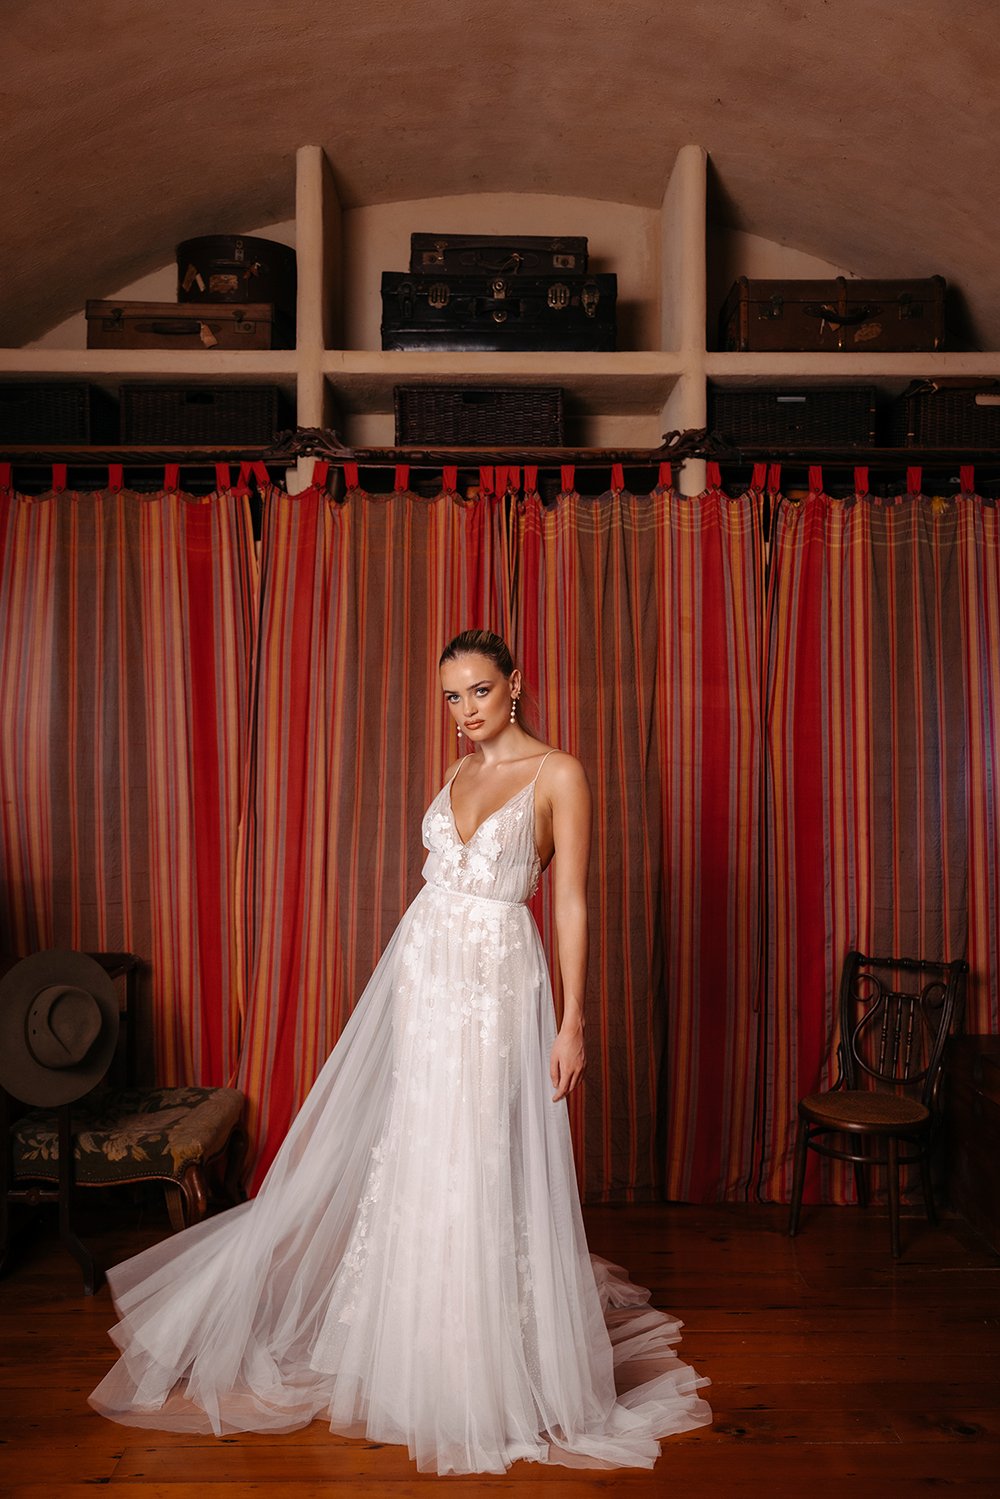 blanc-de-blanc-bridal-boutique-pittsburgh-dress-wedding-gown-cherish...jpg